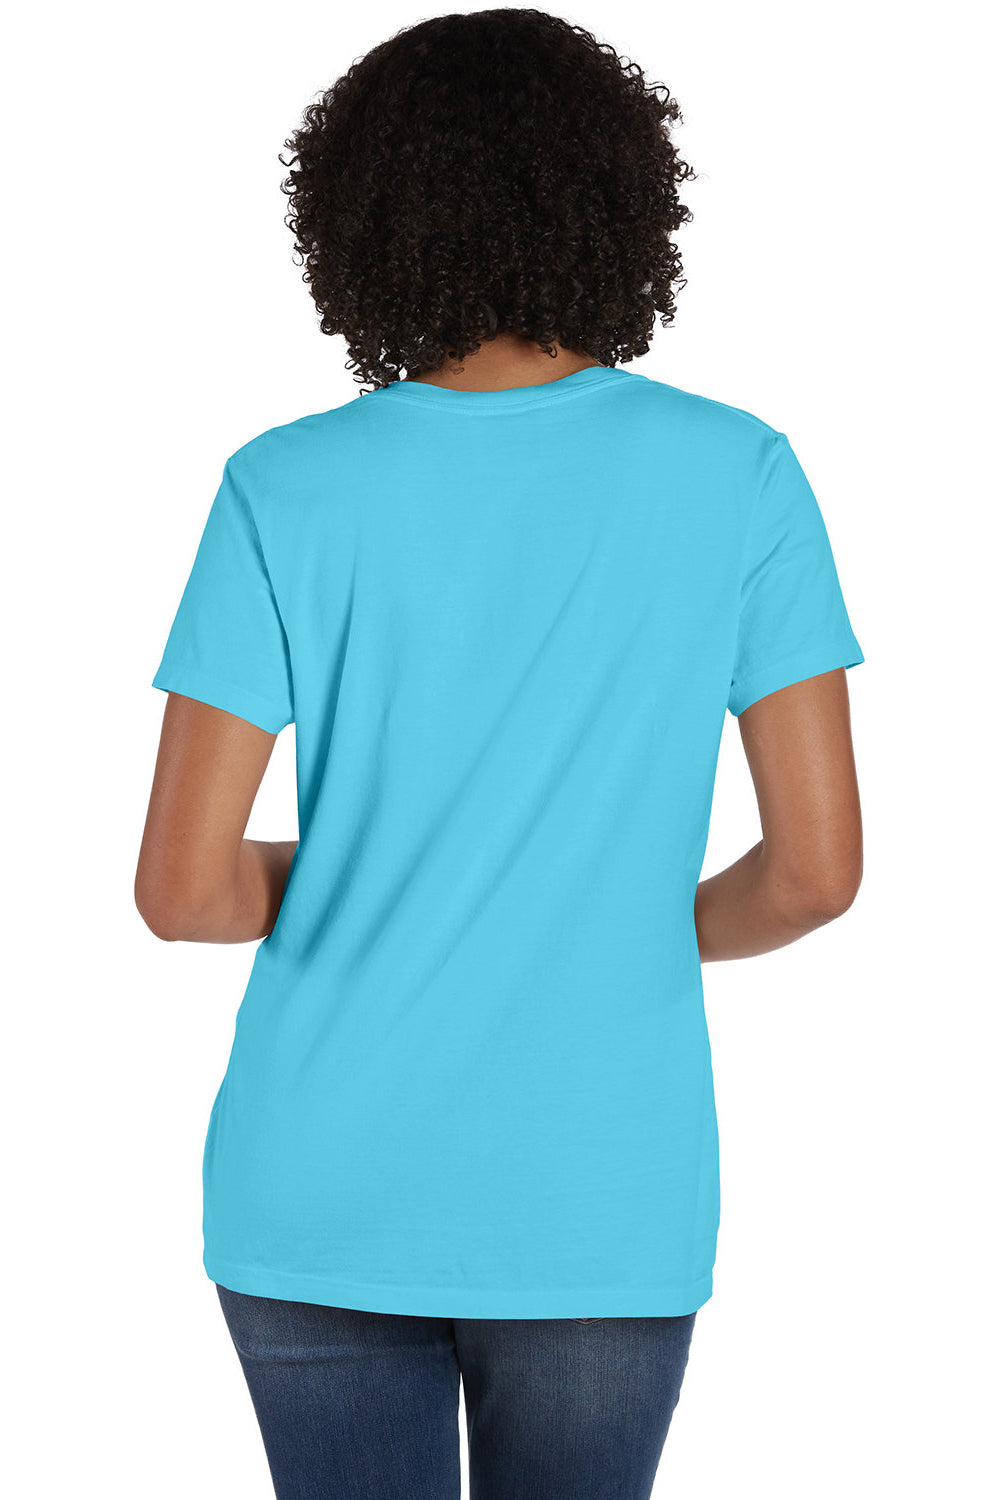 ComfortWash By Hanes GDH125 Mens Garment Dyed Short Sleeve V-Neck T-Shirt Freshwater Blue Model Back